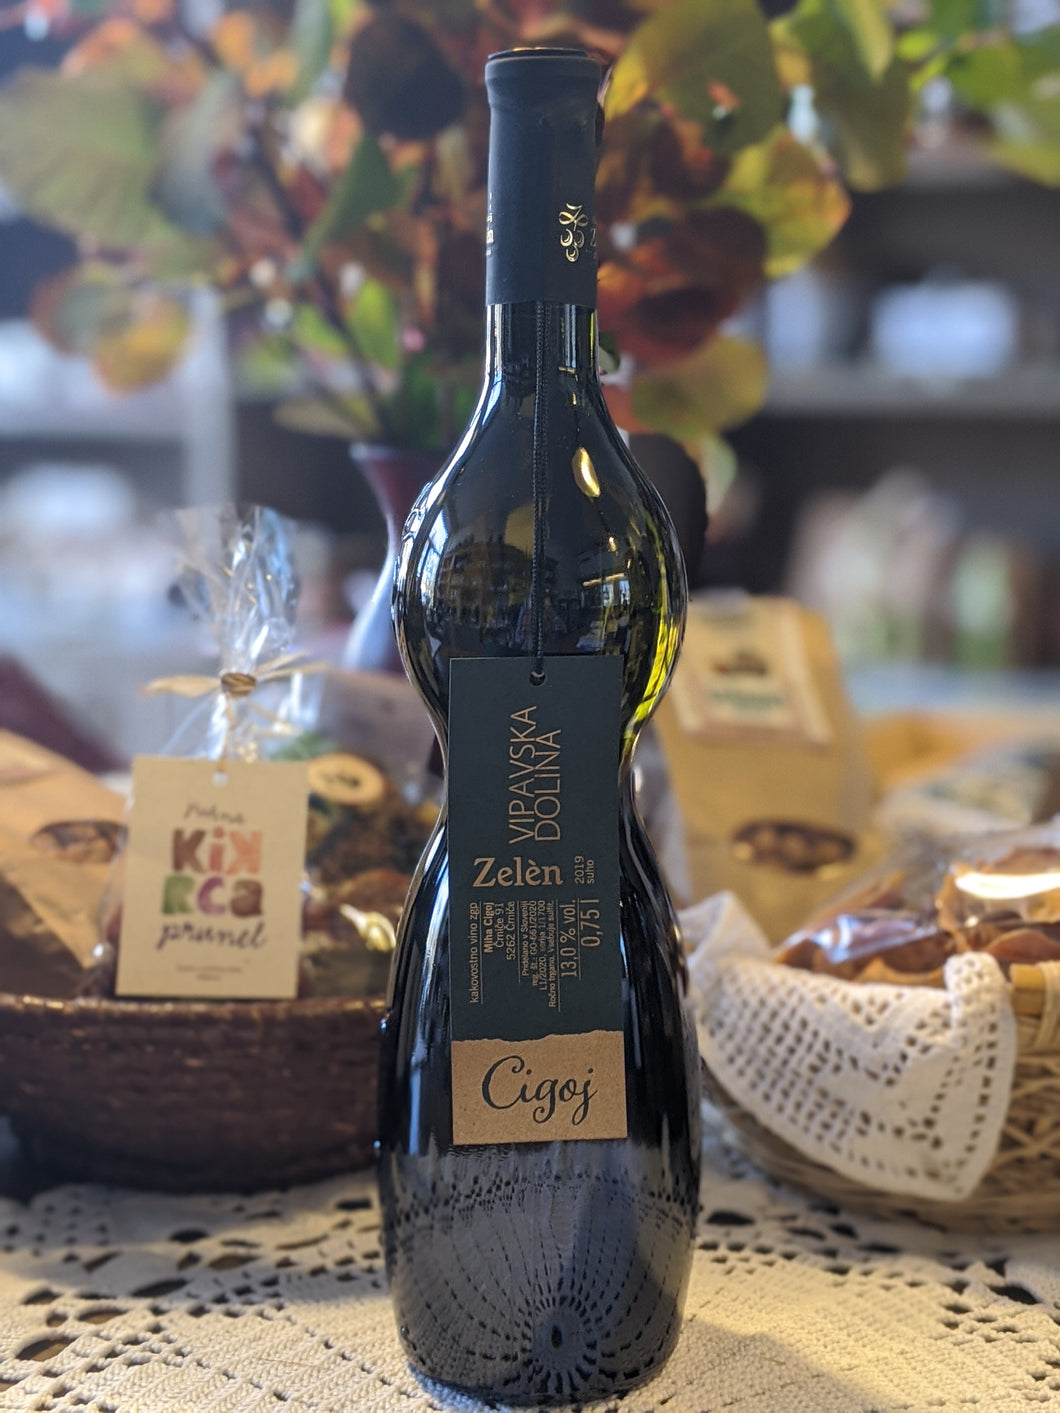 Zelen Cigoj 0.75l - top quality ZGP wine